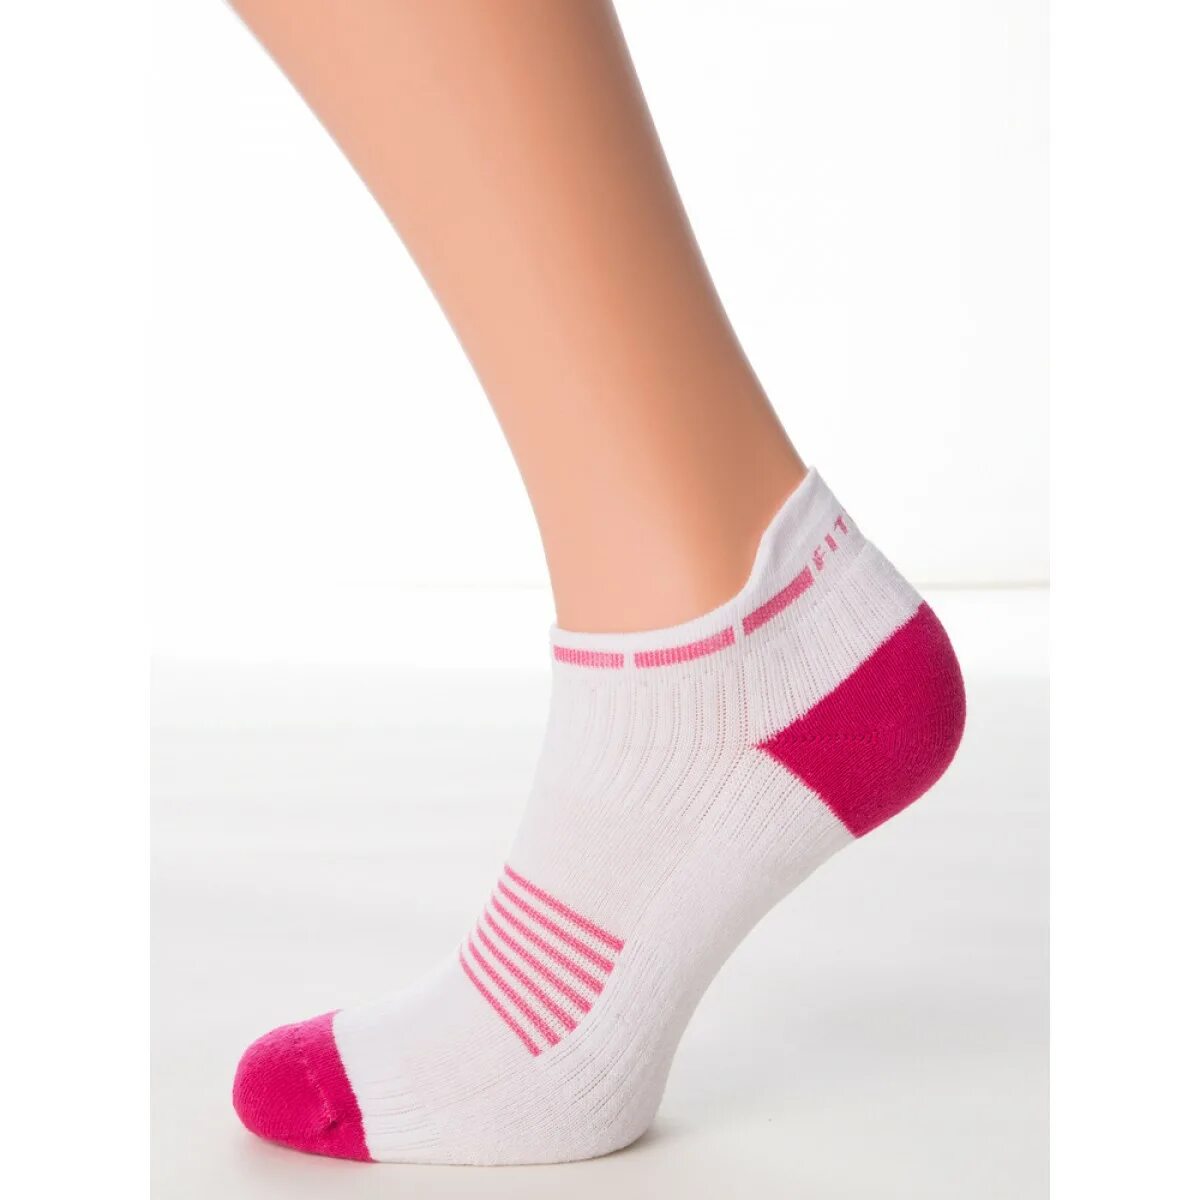 Розово белые носки. Носки Giulia ws1c 007. Короткие спортивные носки. Носки спортивные женские. Спортивные носки женские короткие.